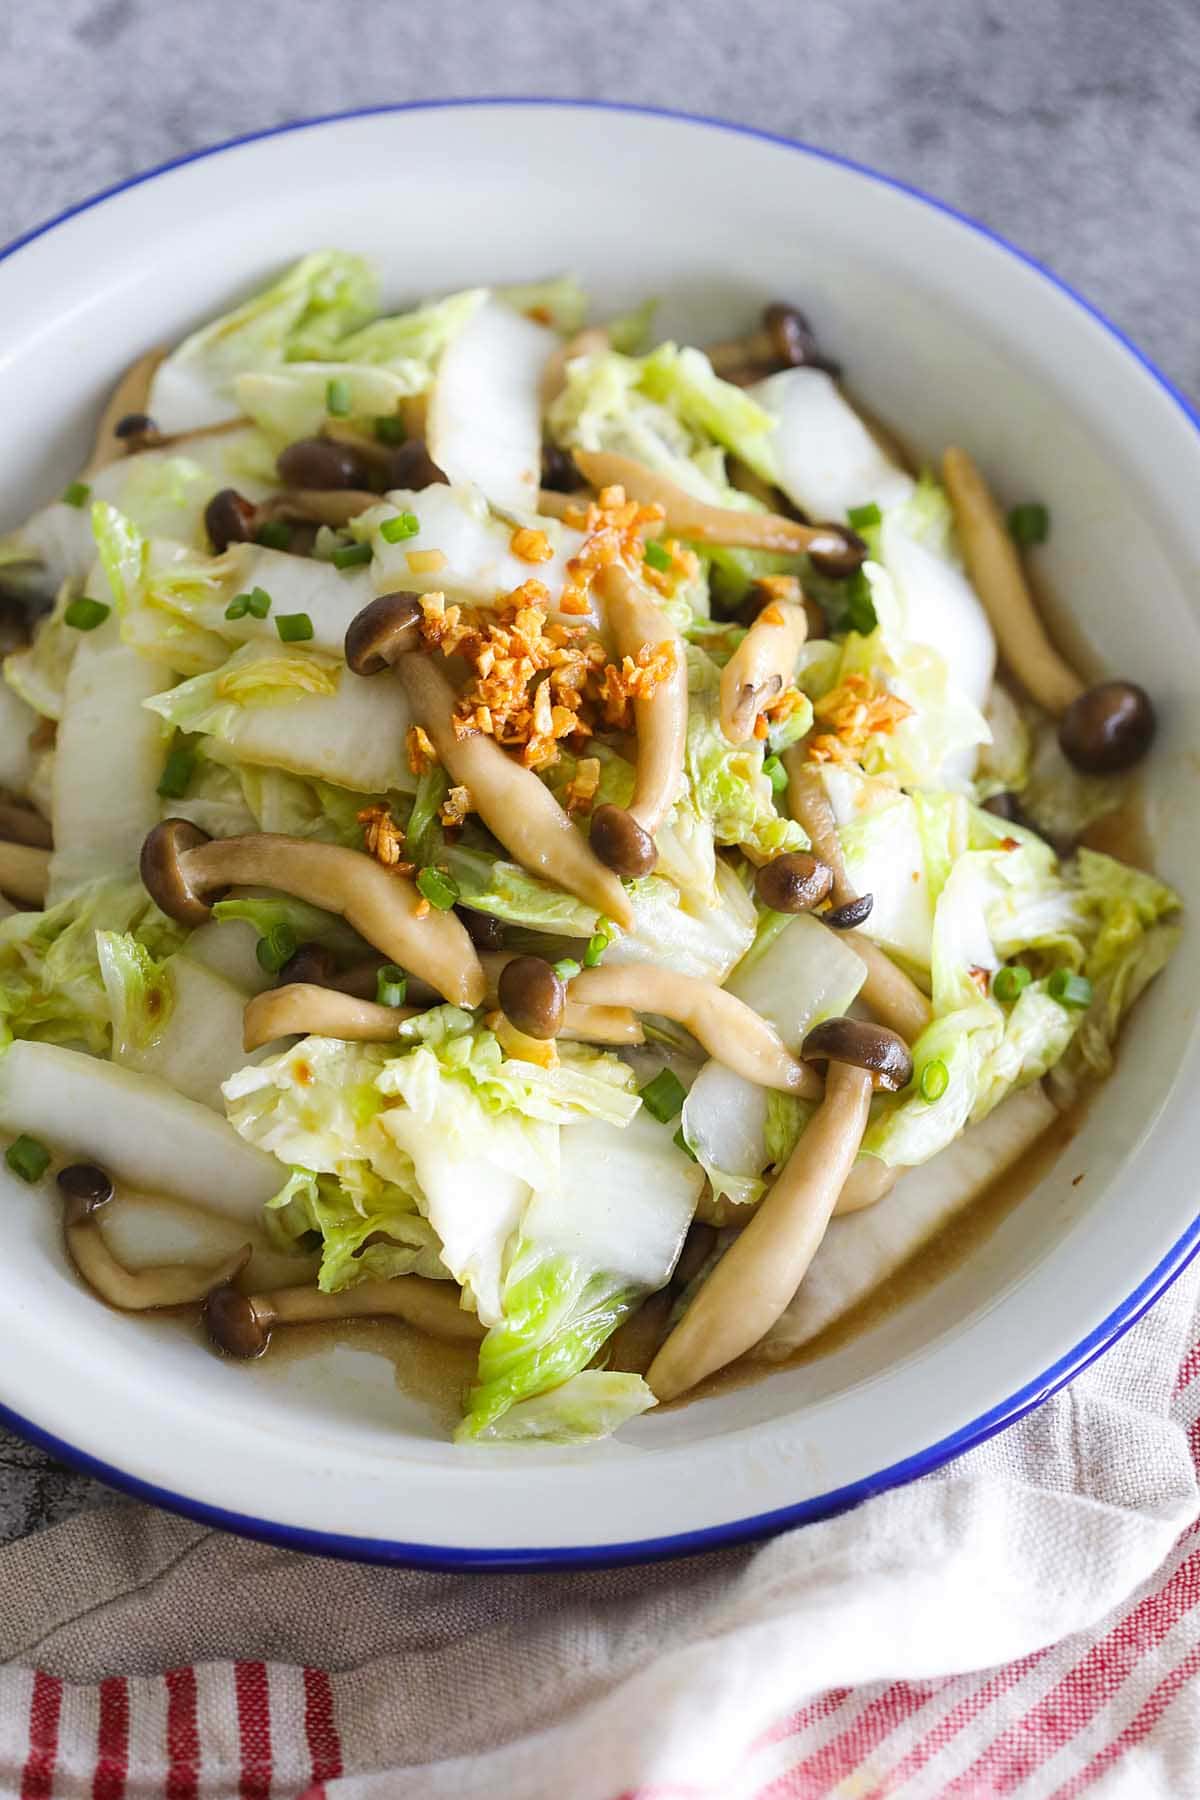 One bowl of Napa cabbage stir fry with mushroom.